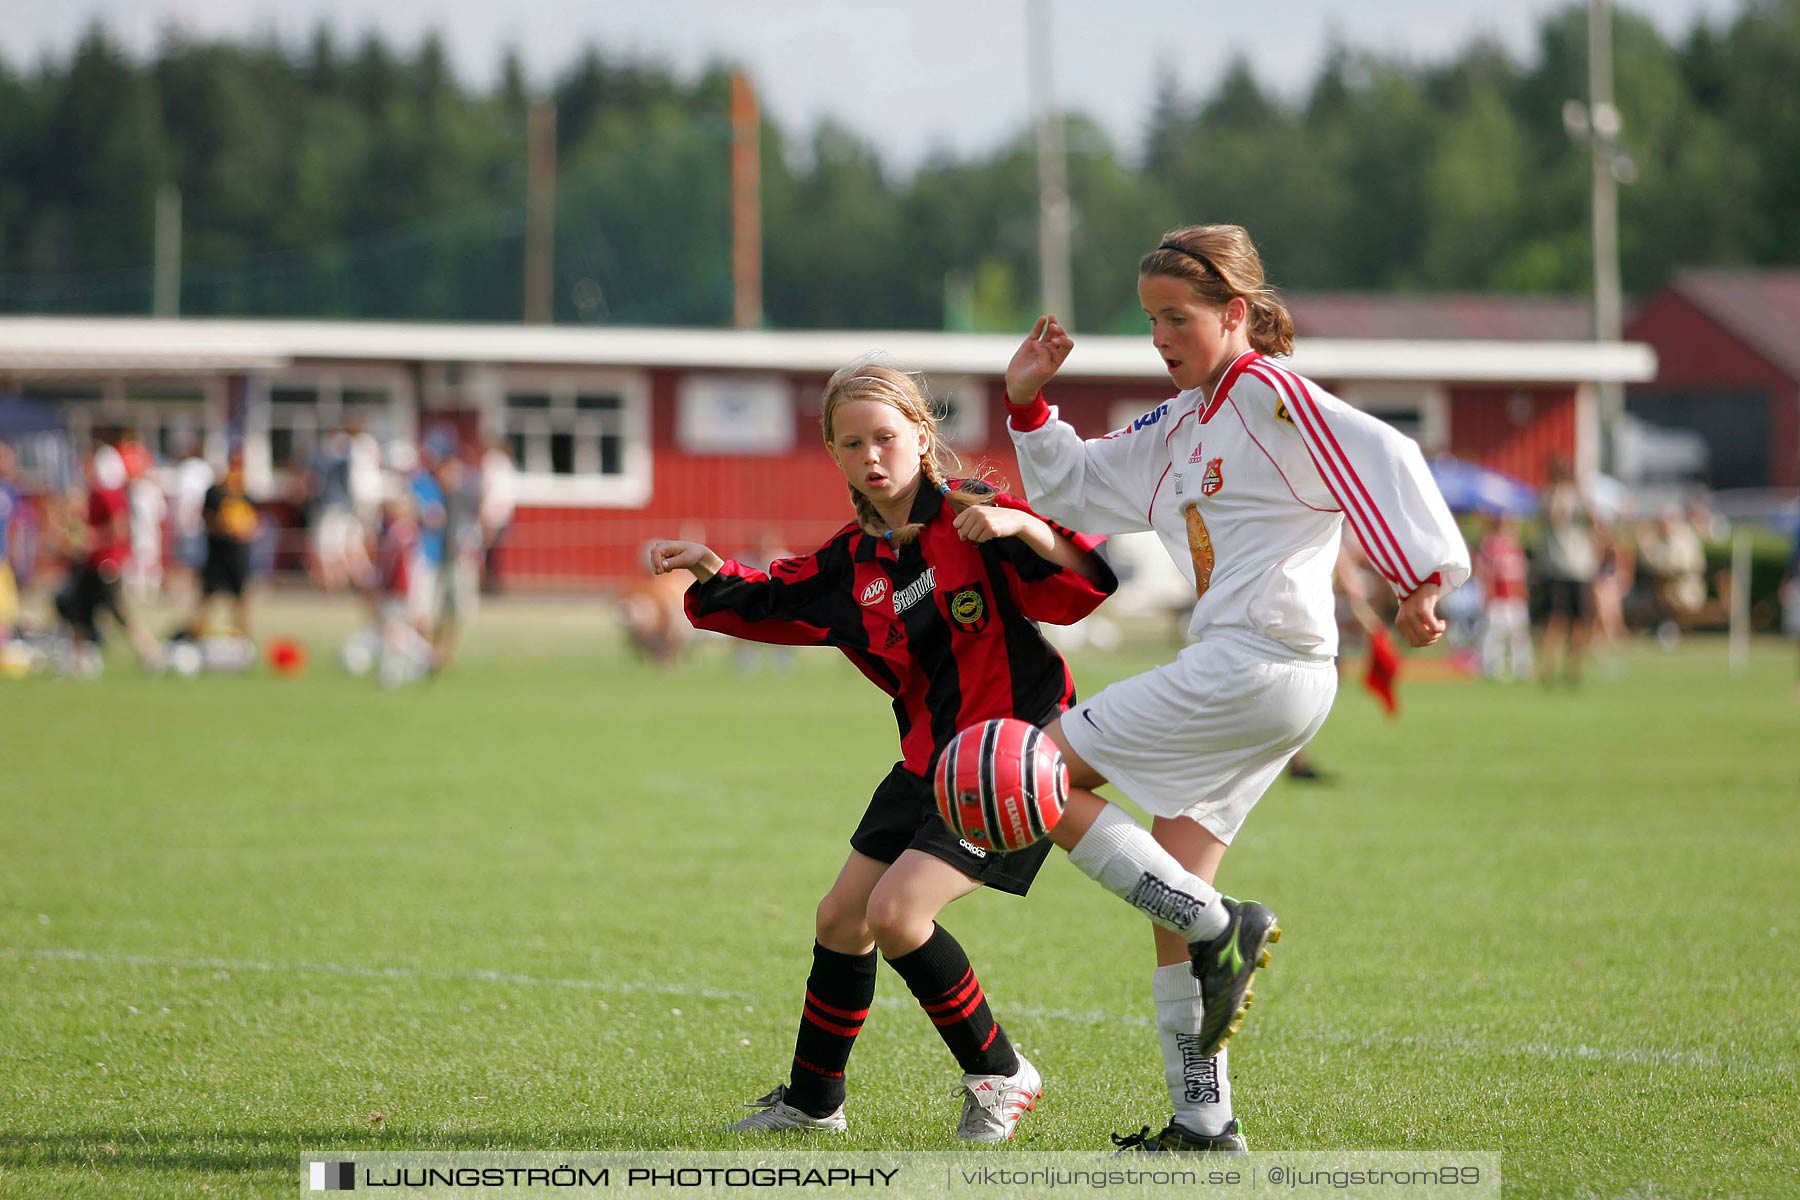 Ulvacupen 2006,mix,Åbrovallen,Ulvåker,Sverige,Fotboll,,2006,147385